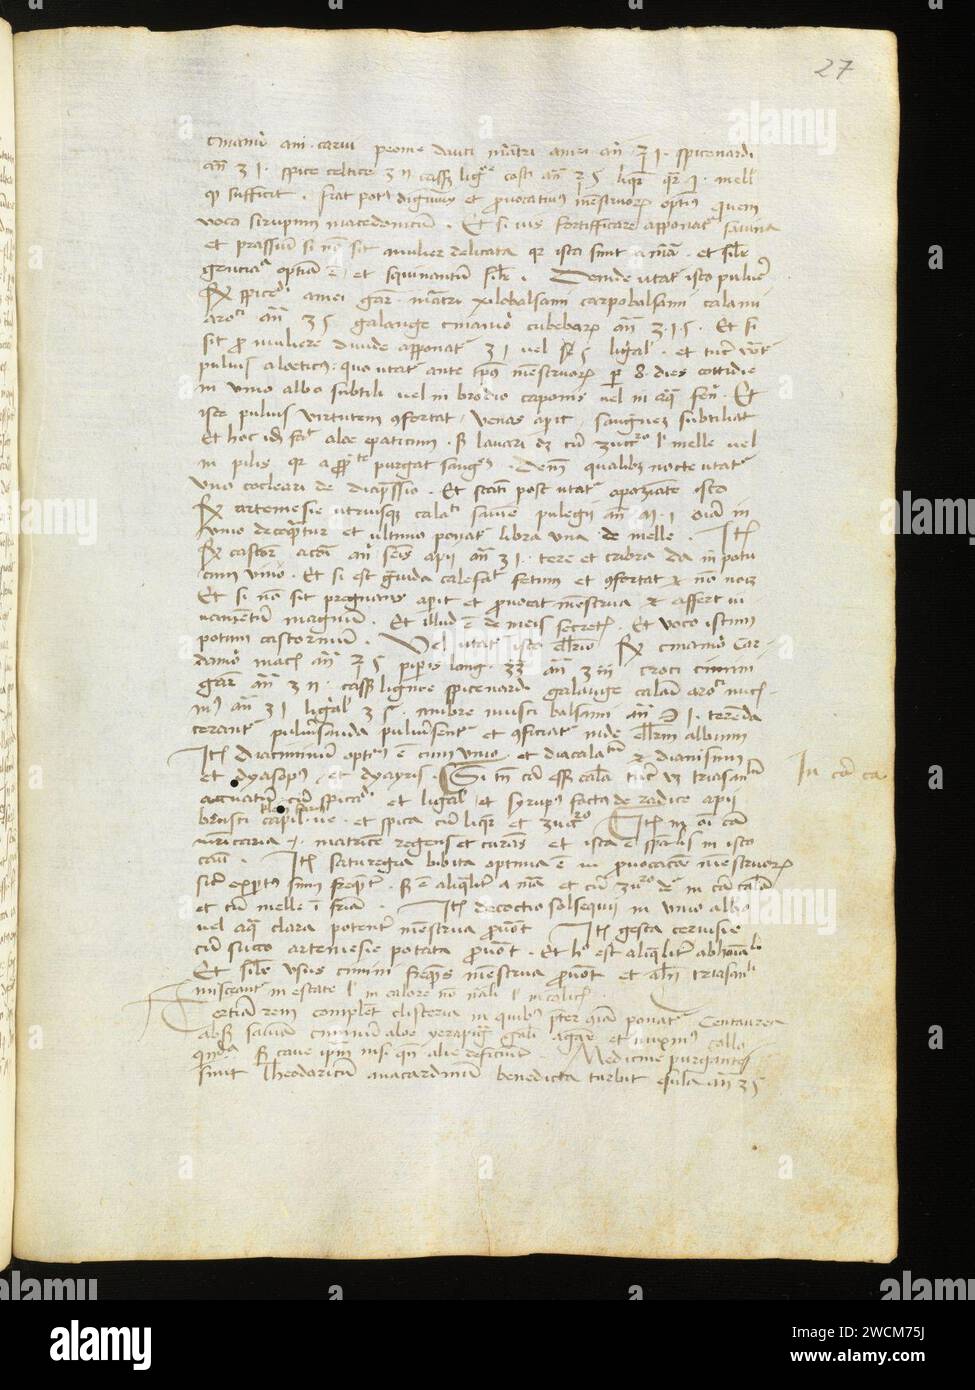 Aarau, Aargauer Kantonsbibliothek, MsMurF 85, F. 2 0027r – Antonius Guainerius, Tractatus medicinales. Banque D'Images